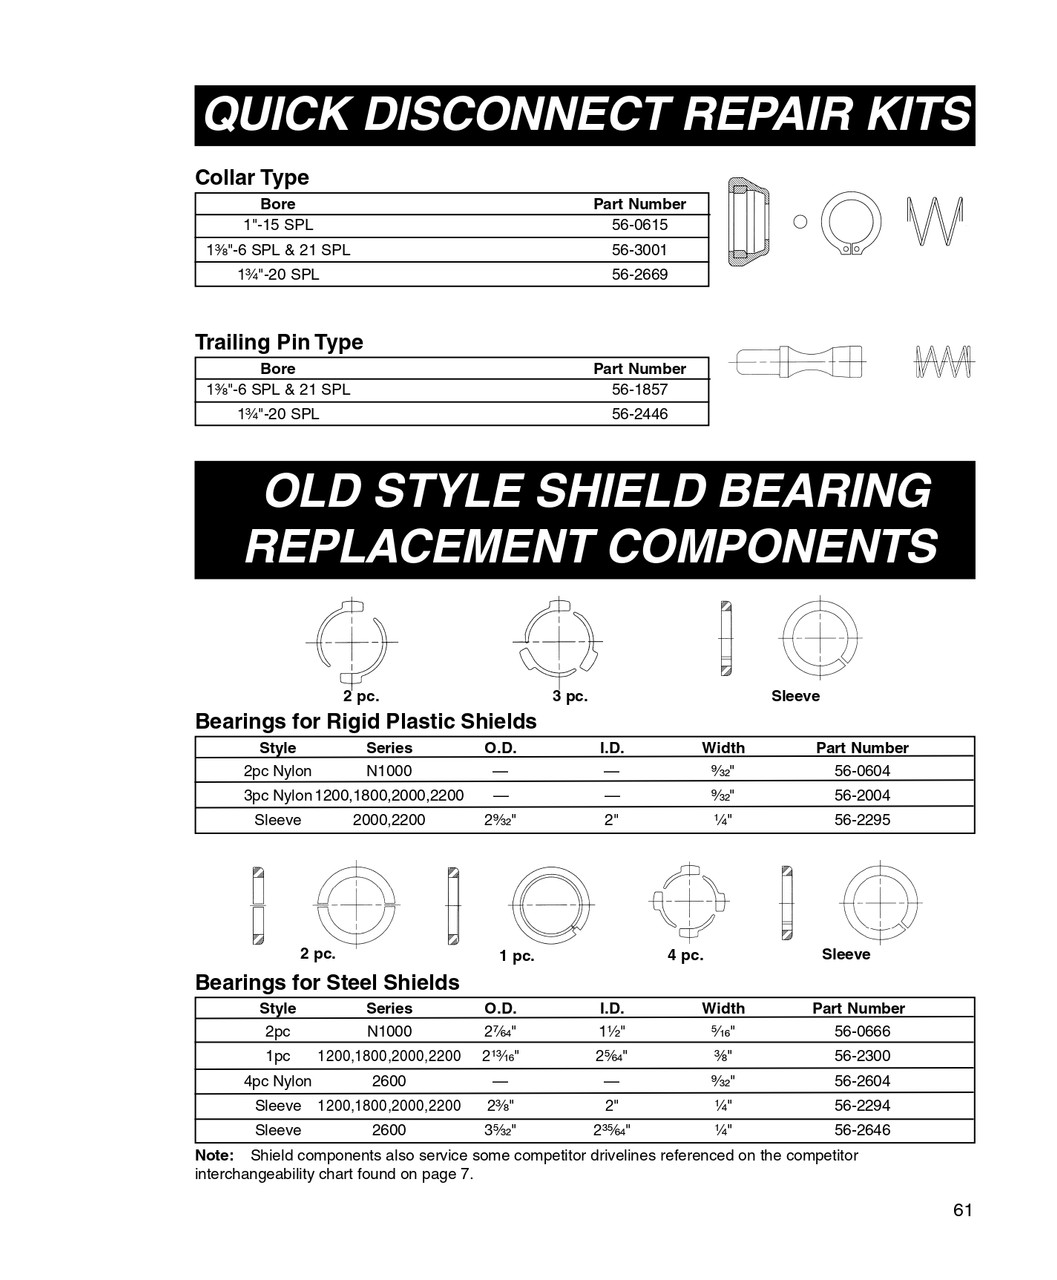 1-3/8" 6 & 21 Spline Replacement Q/D Slide Collar  56-3001